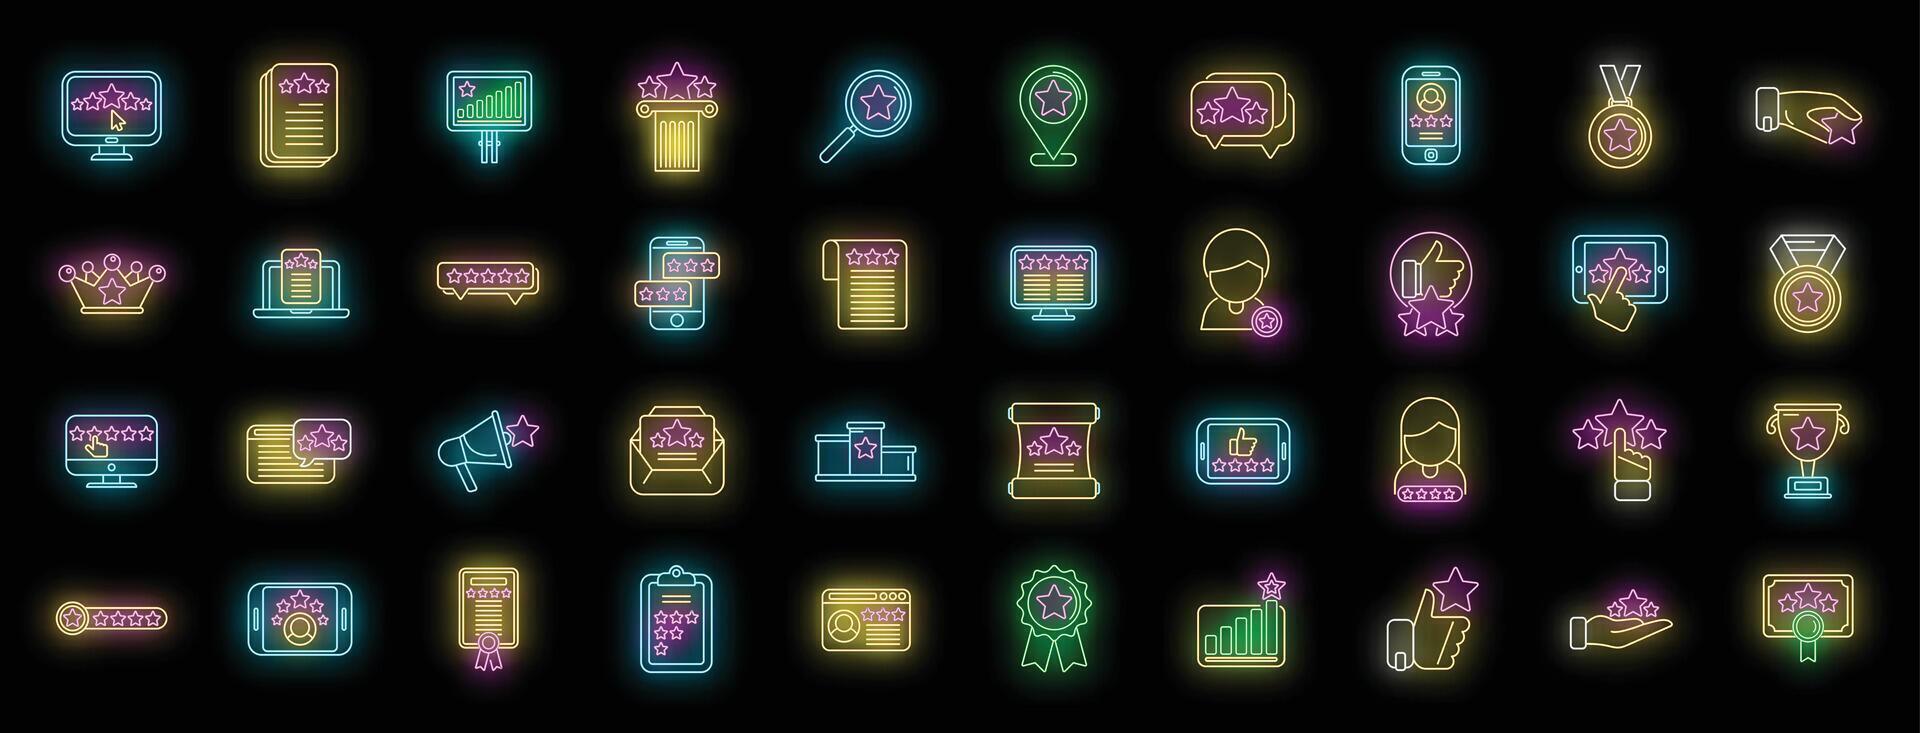 Ranking icons set neon vector